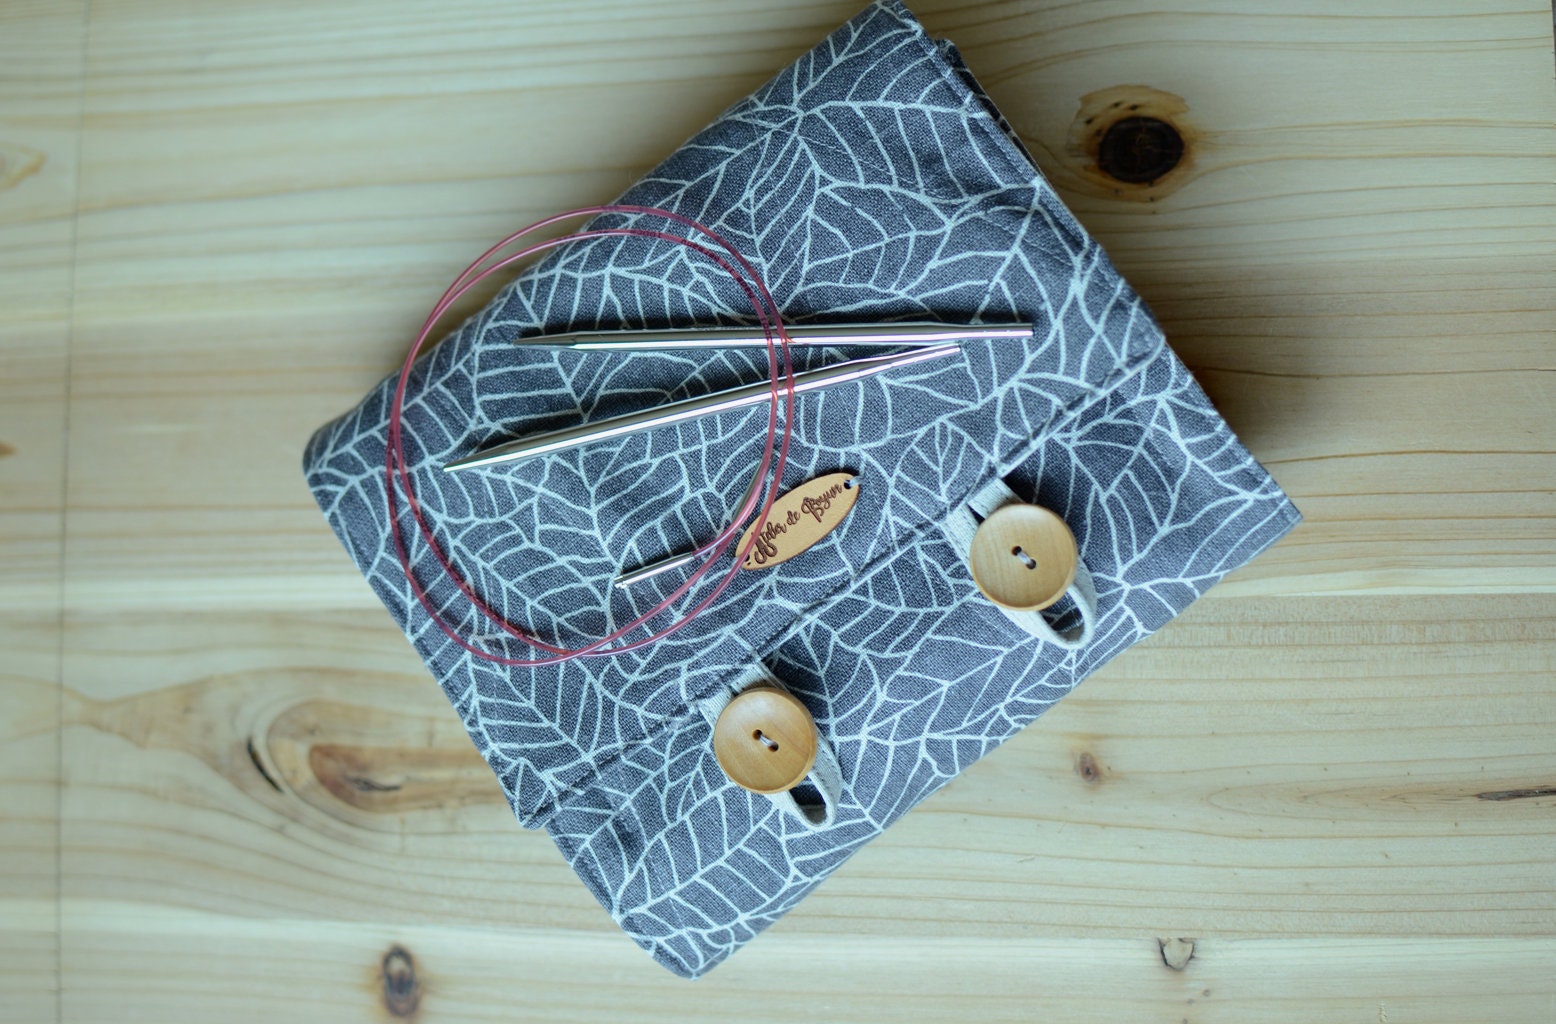 Circular Knitting Needle Case With a Zipper Pocket: Knitting